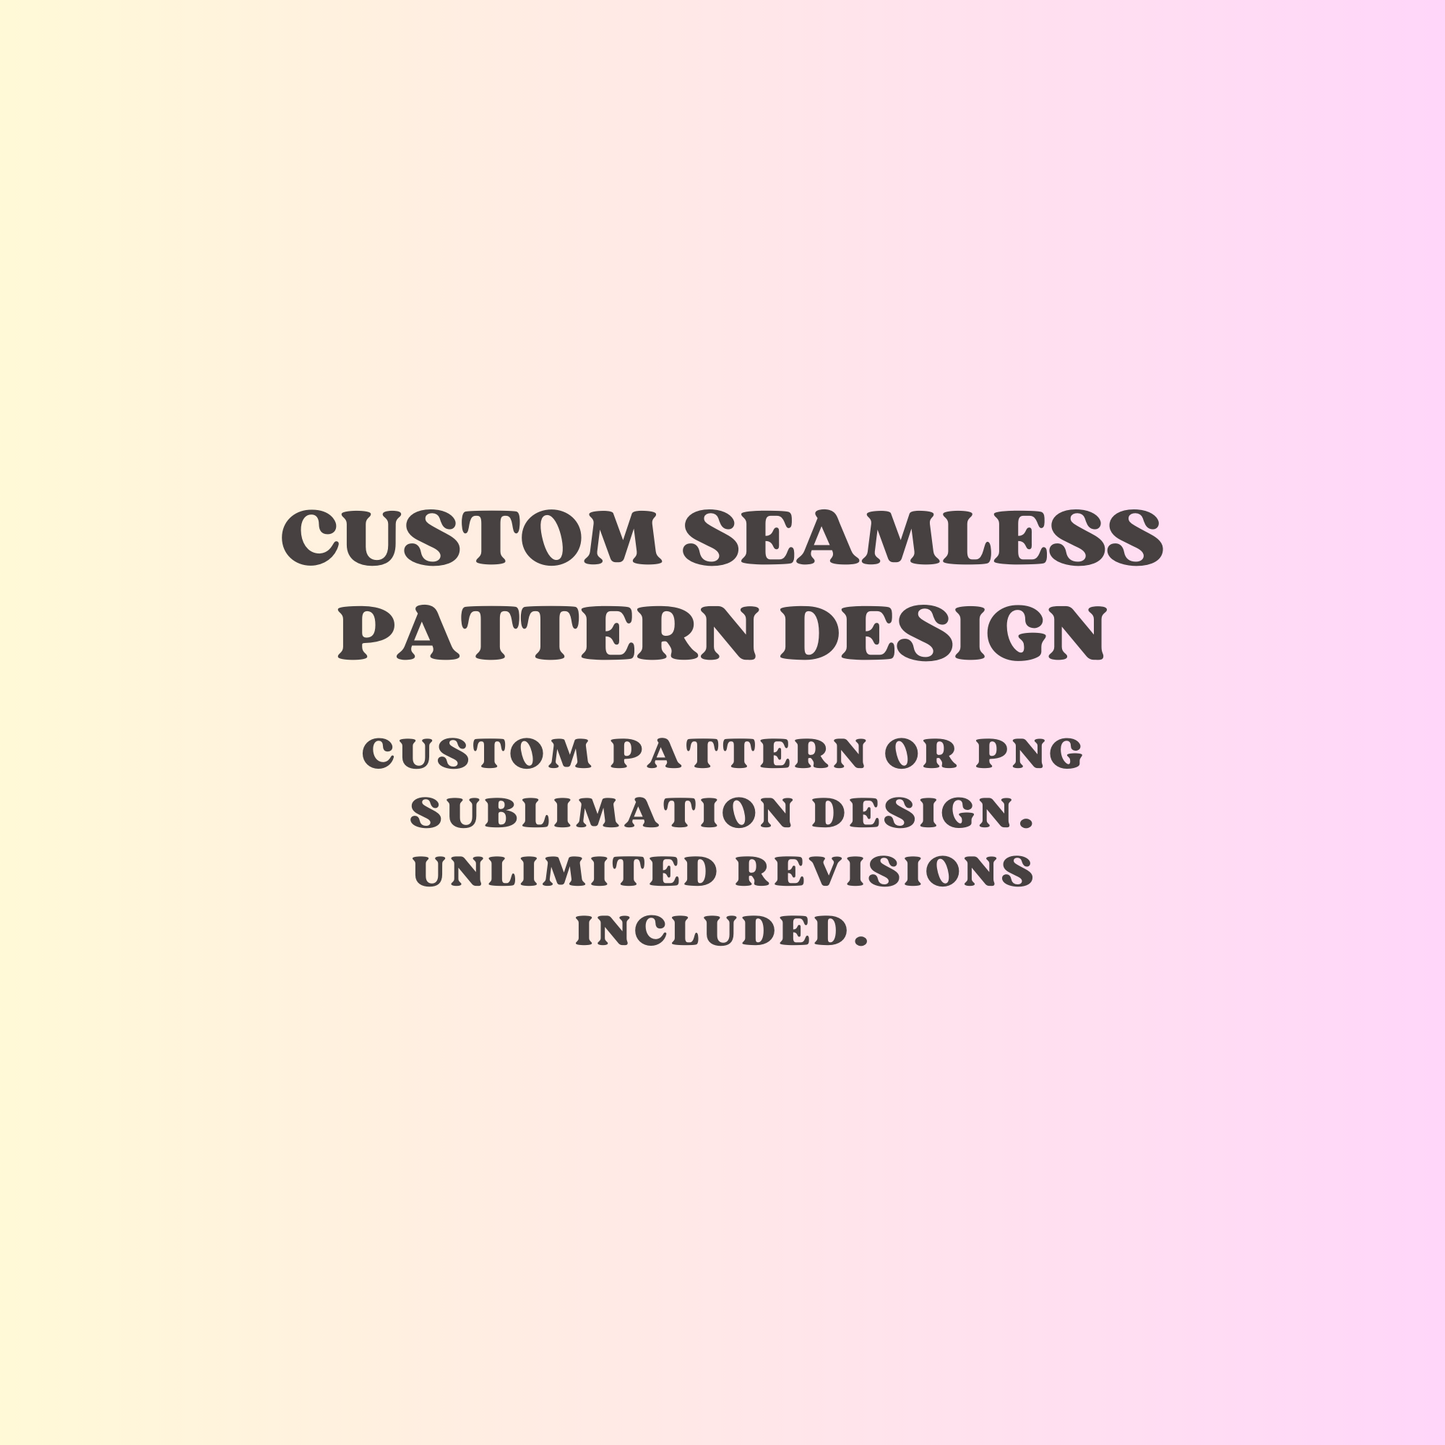 Custom Seamless Pattern Design By Skyy Designs Co.